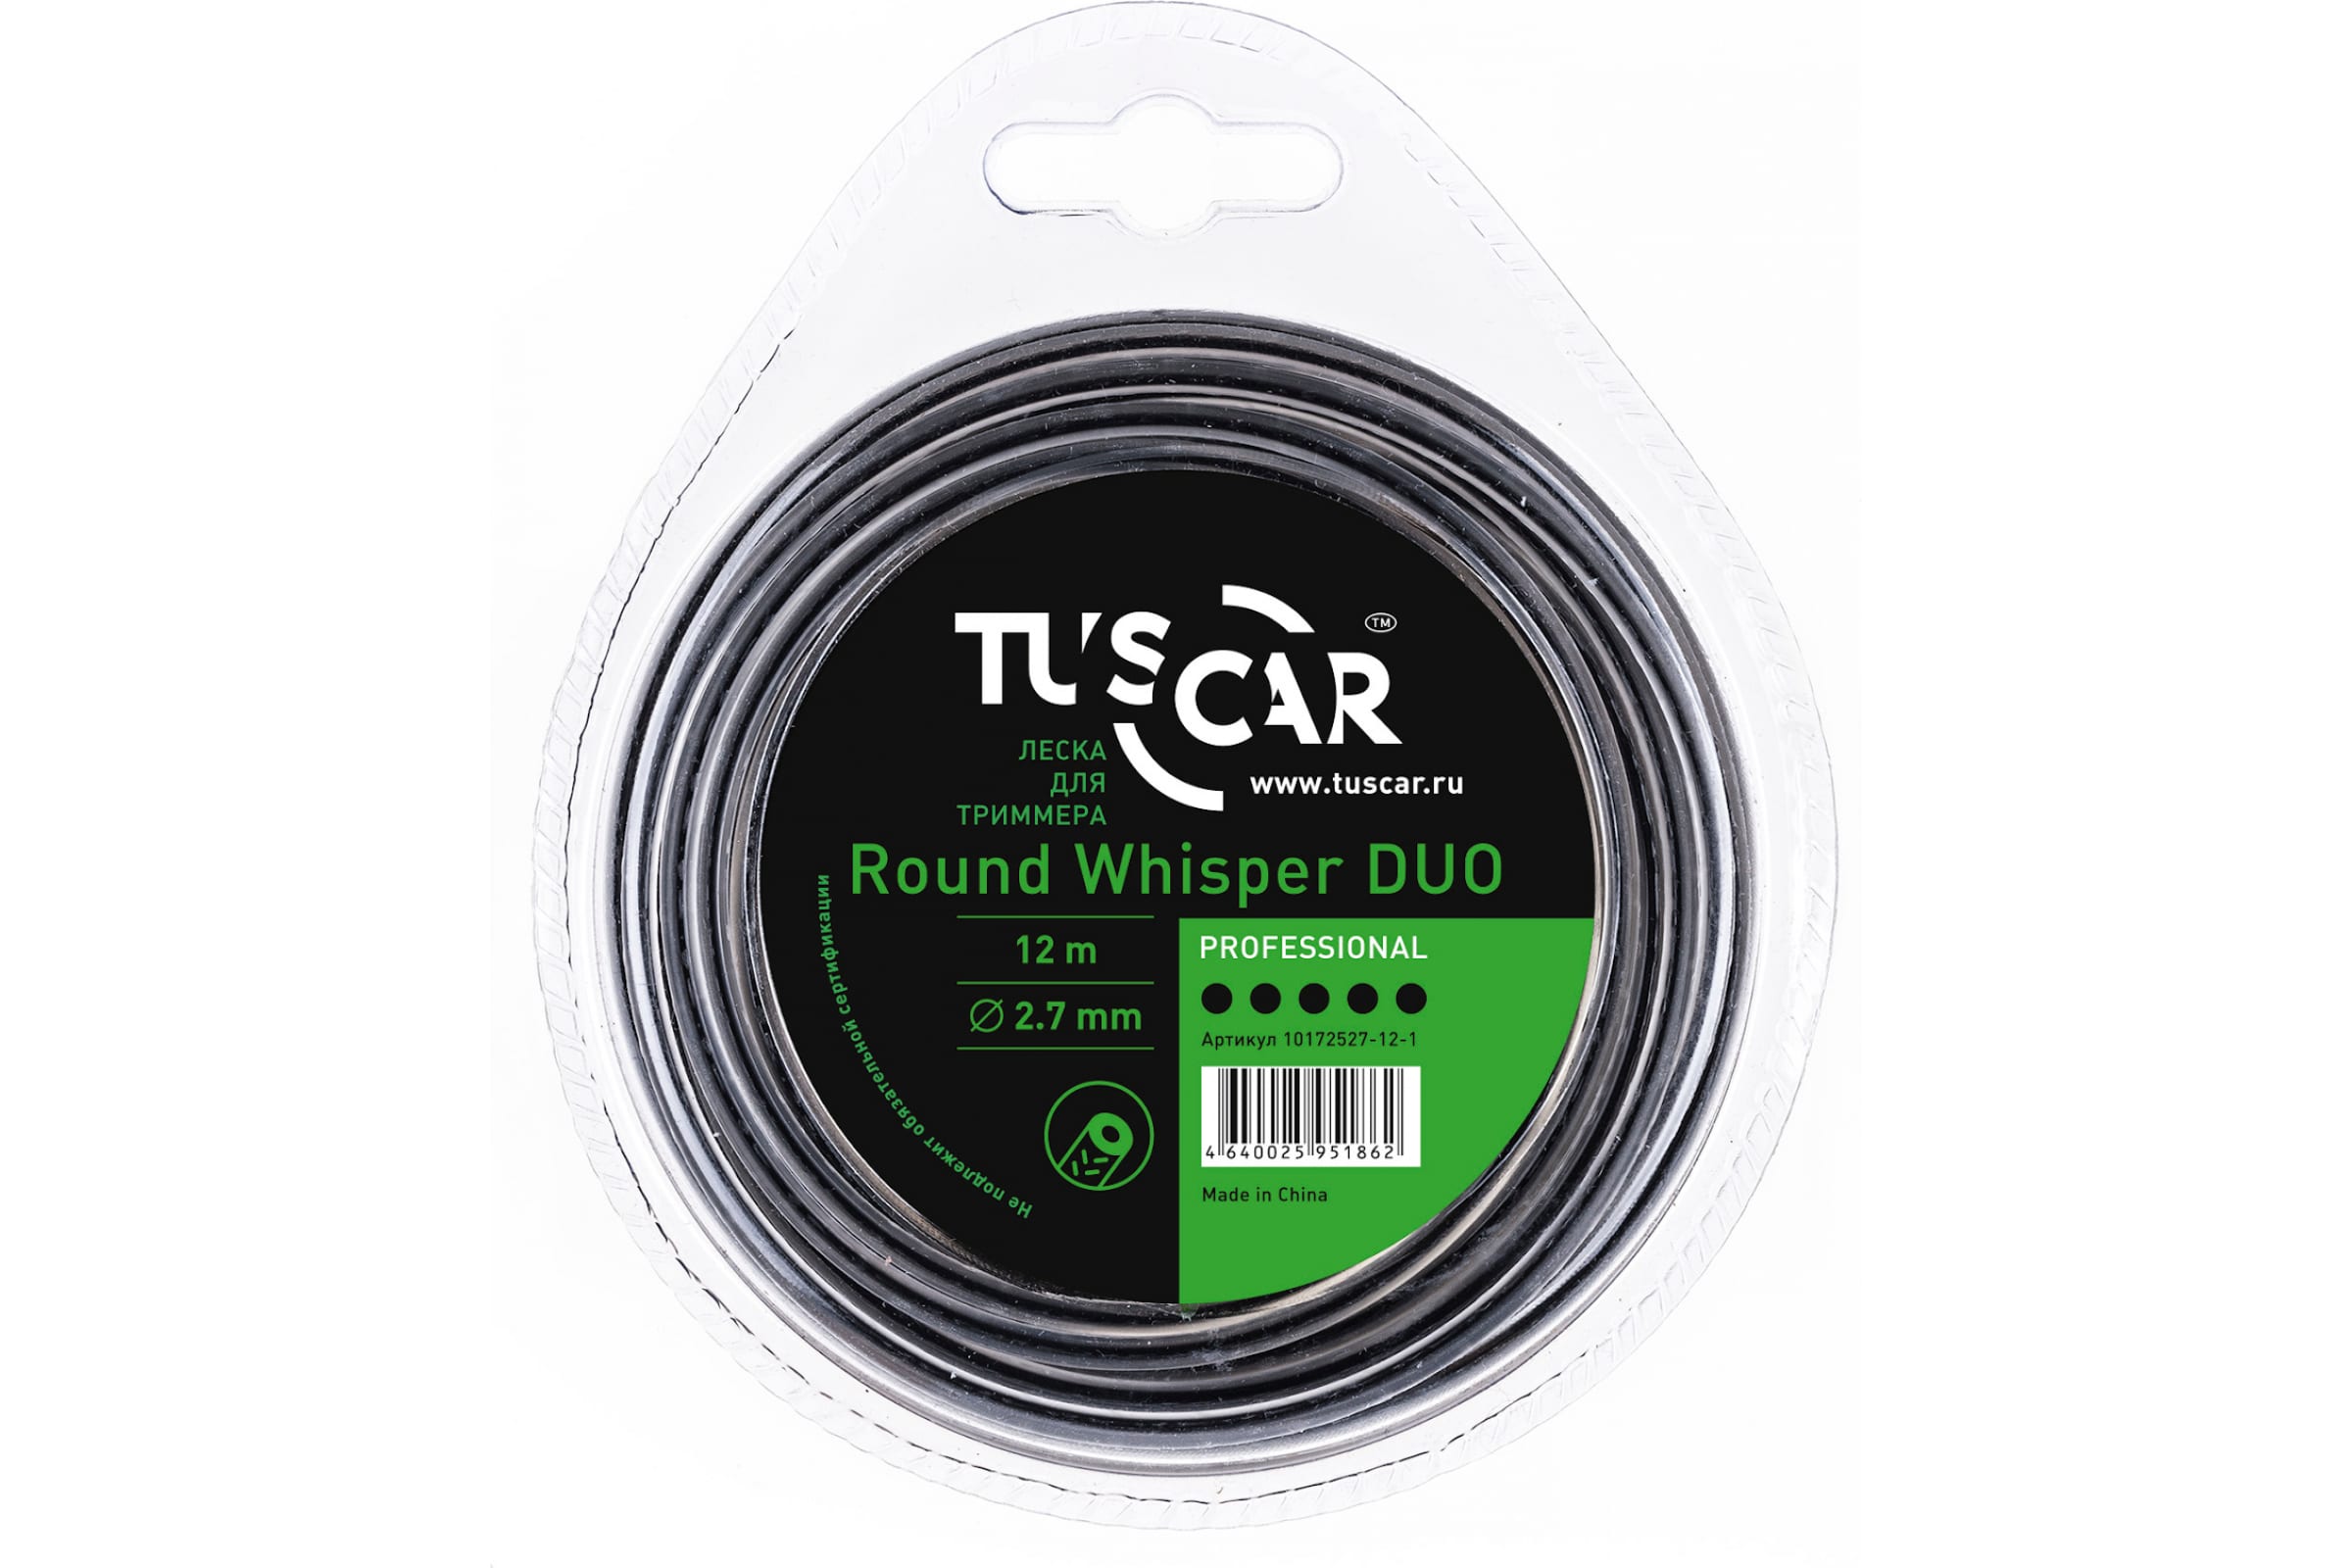 фото Tuscar леска для триммера round whisper duo, professional, 2.7mmx12m 10172527-12-1